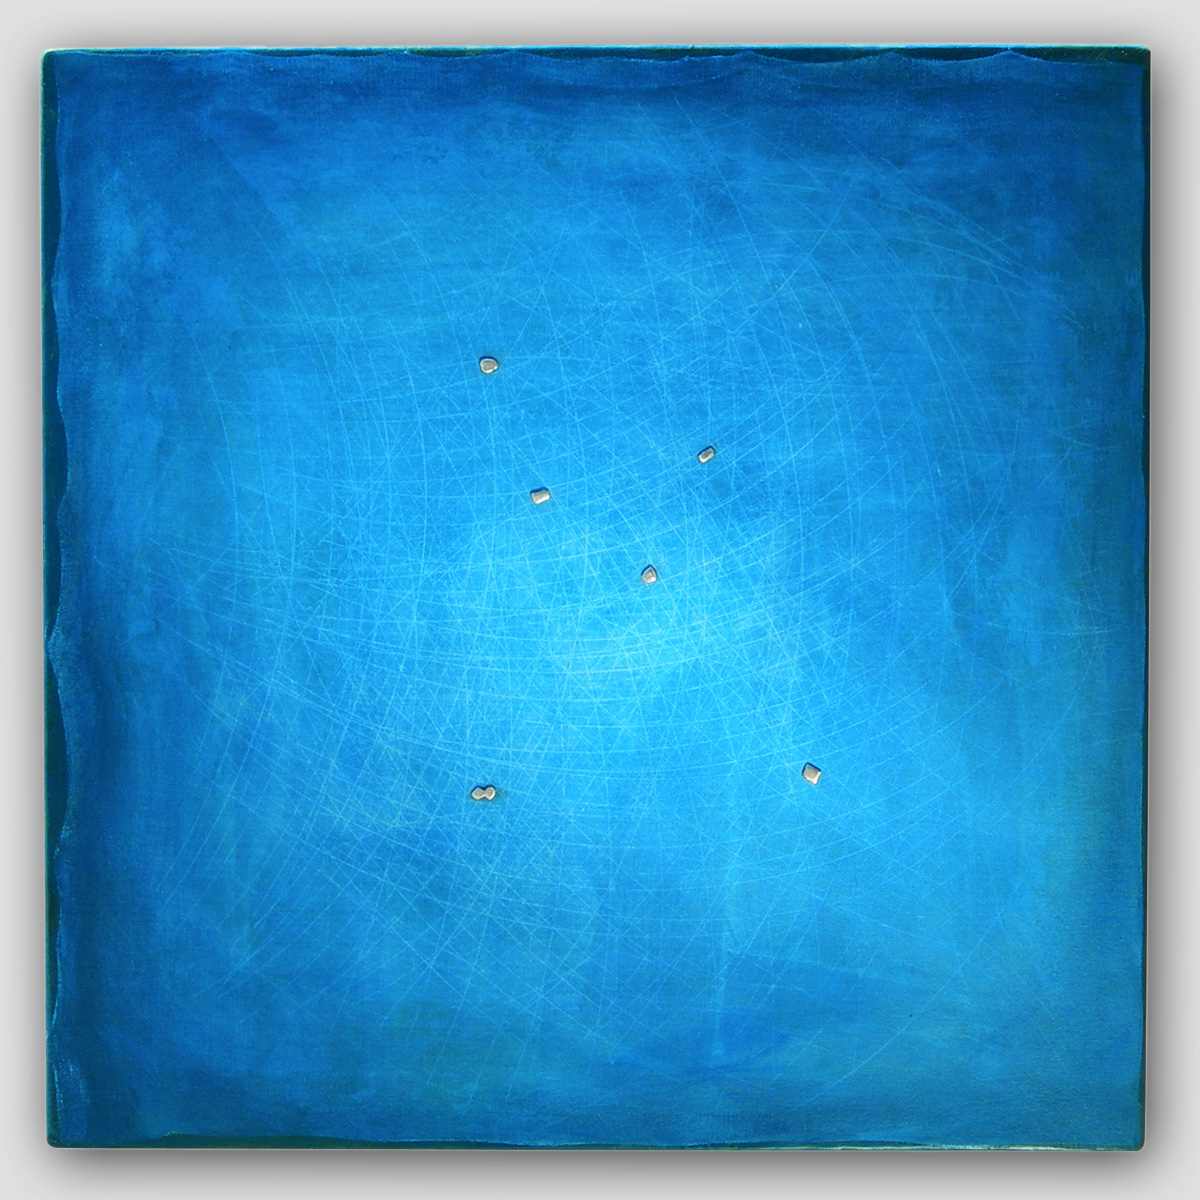 025-REBIS  -TOTEM bidimensionale  -
2008 -
mixed media on canvas panel  
90 x 90 cm.